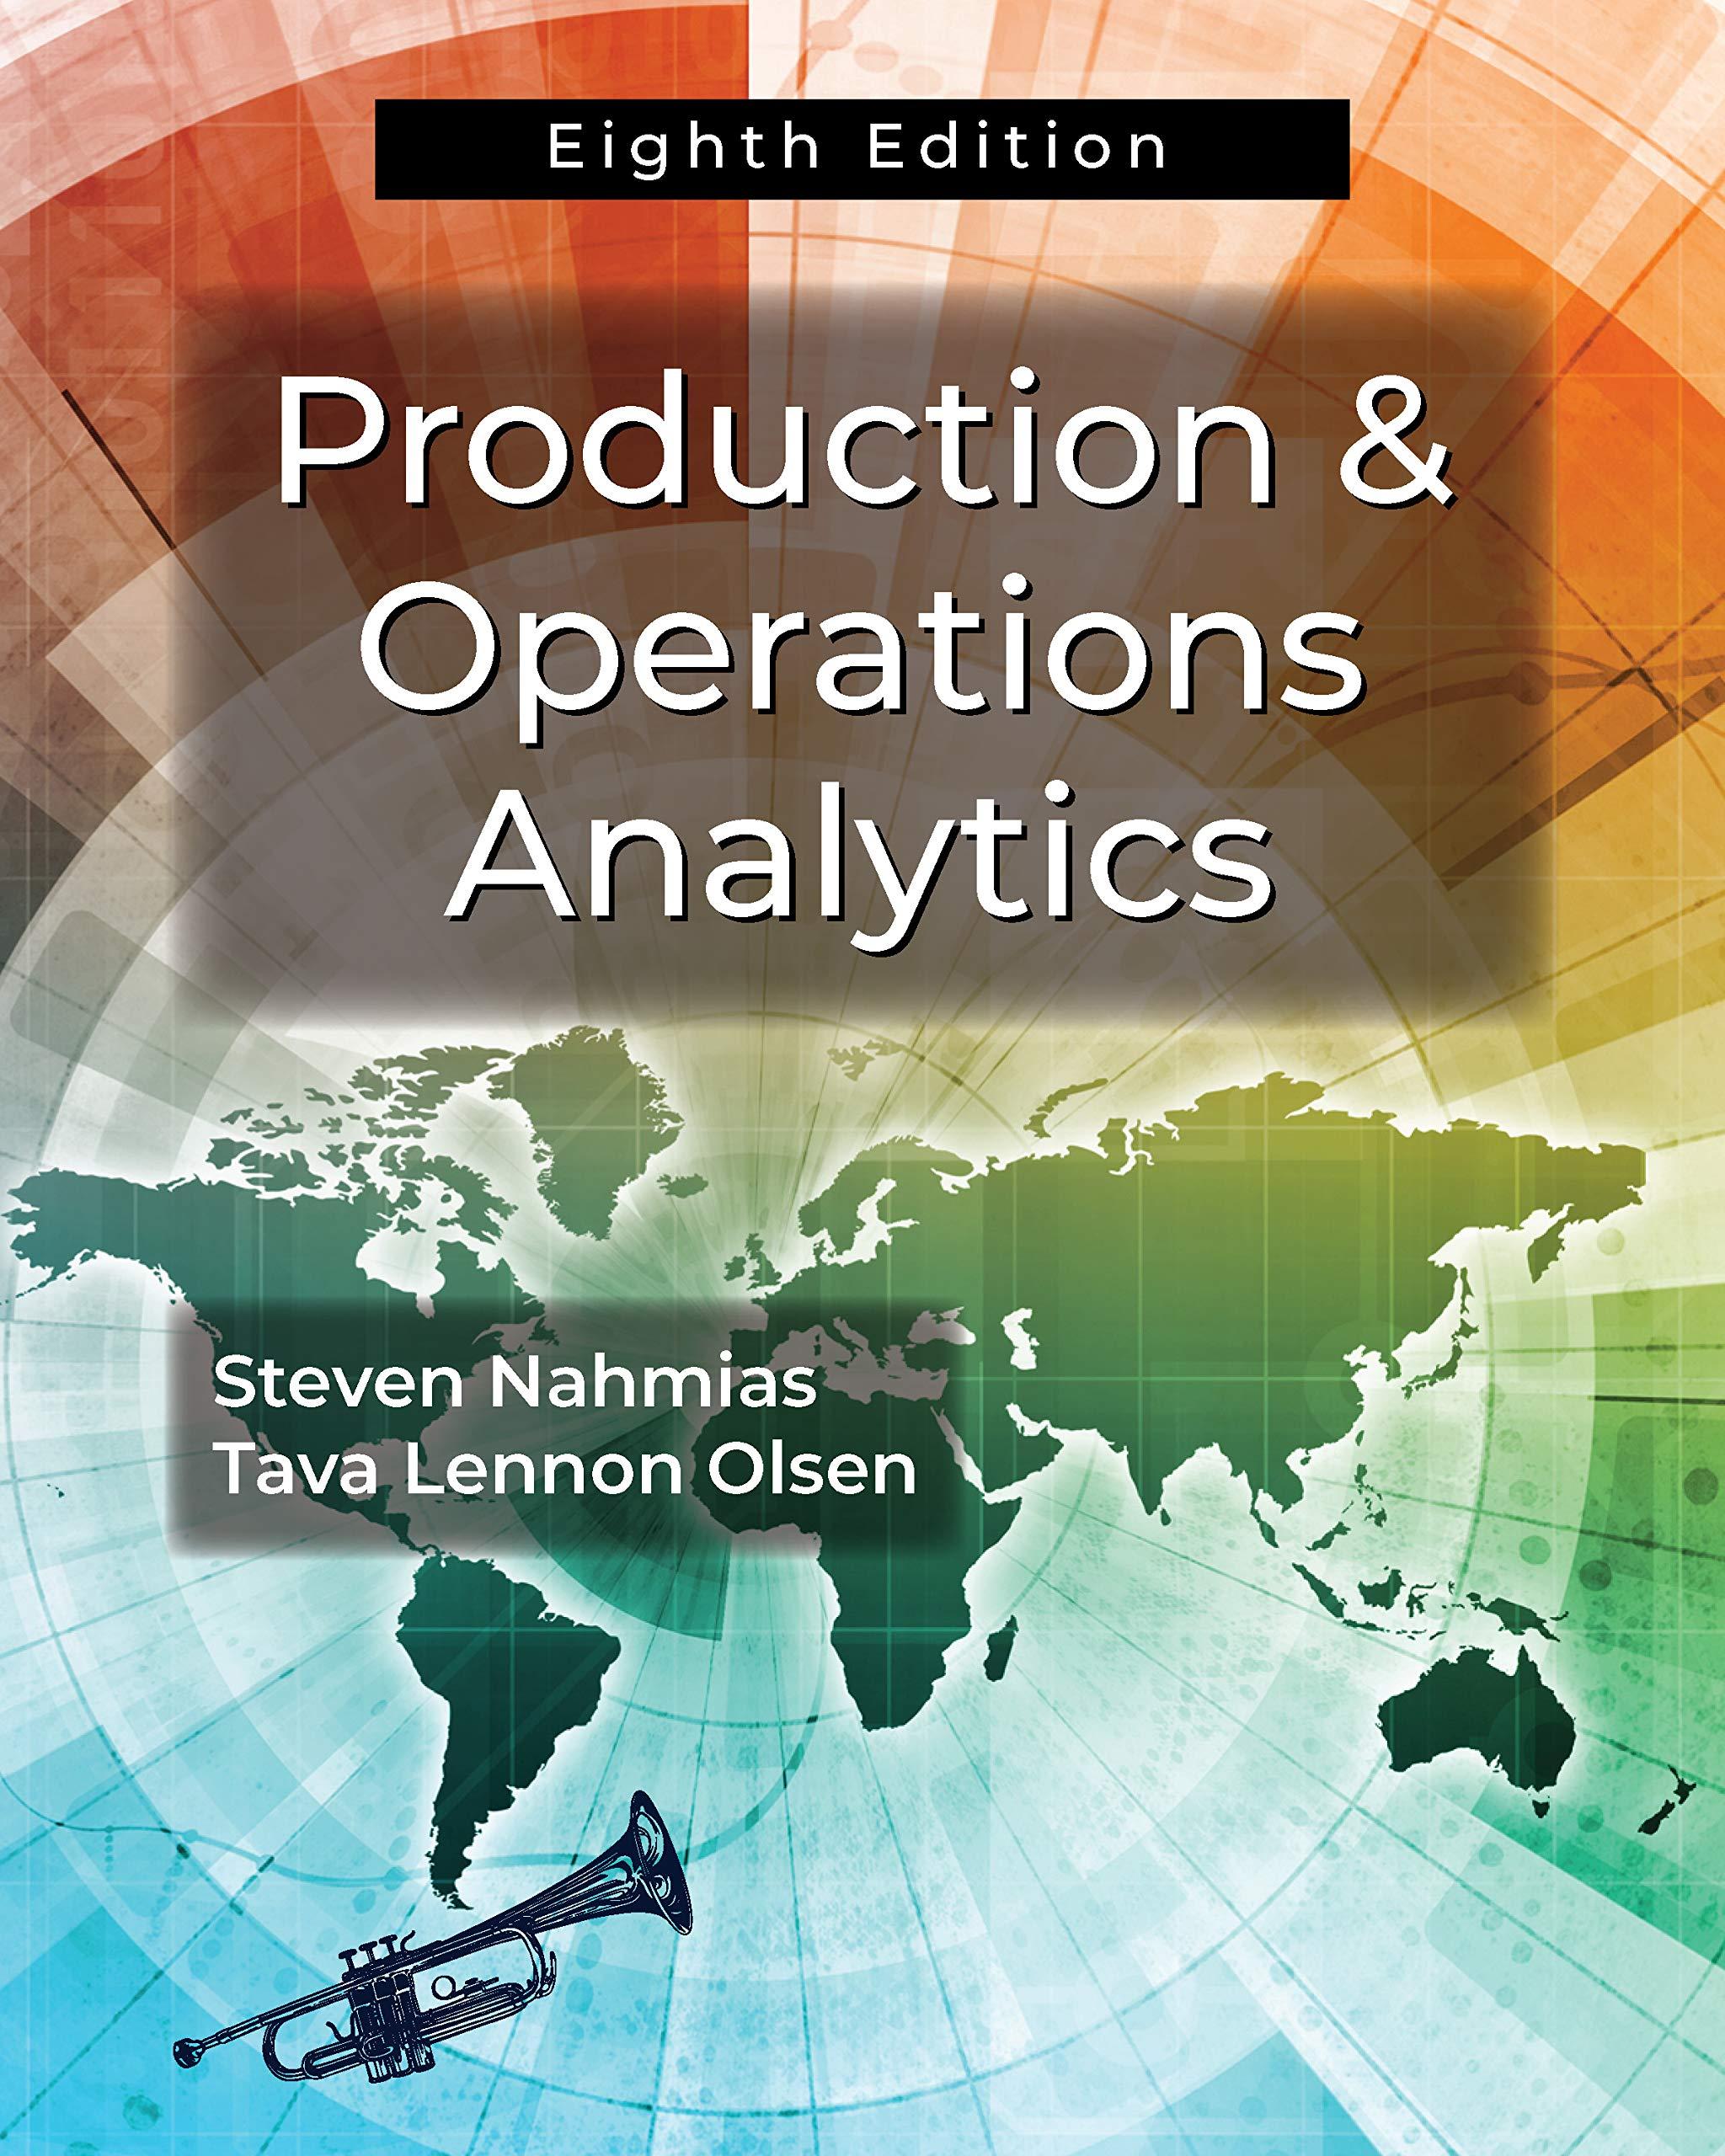 production and operations analytics 8th edition steven nahmias, tava lennon olsen 1478639261, 9781478639268